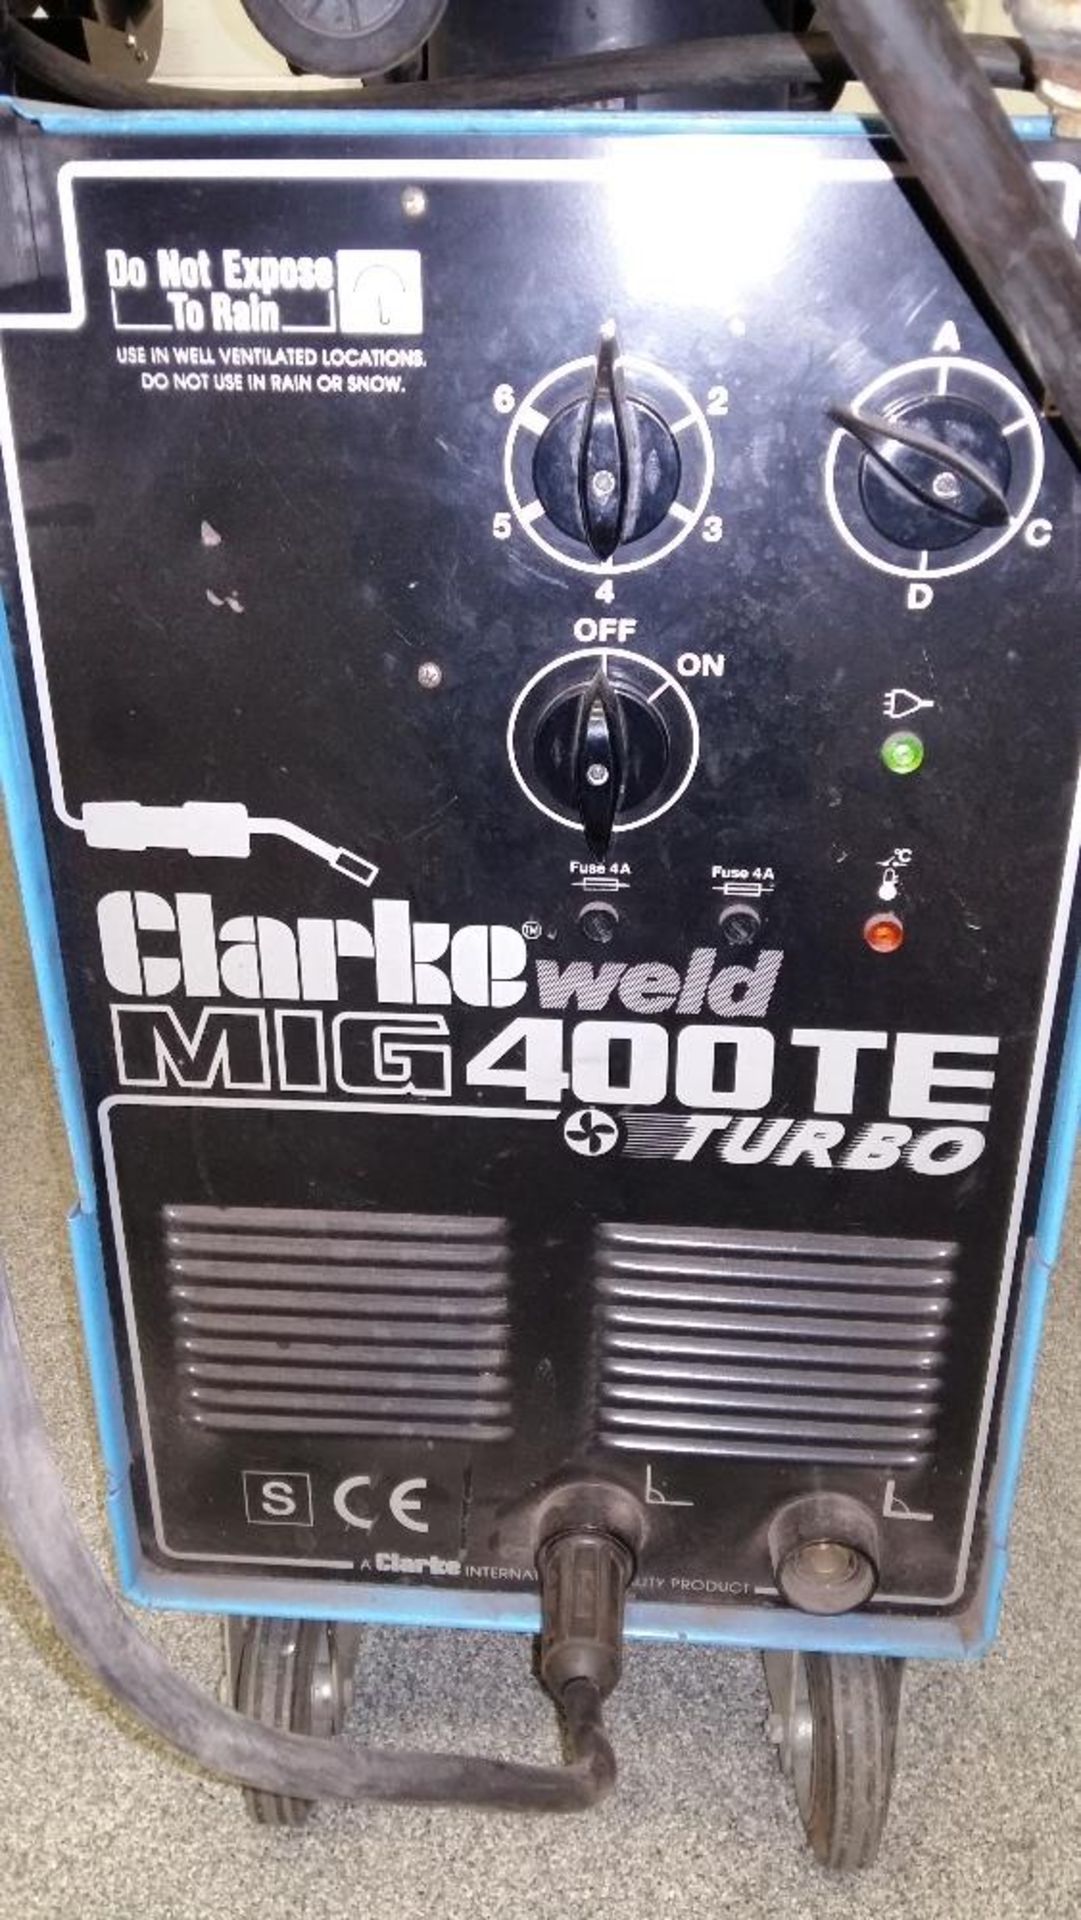 Clarke Weld Mig 400 TE turbo mig welder & Mig Wire Feed 2 unit - Image 4 of 9